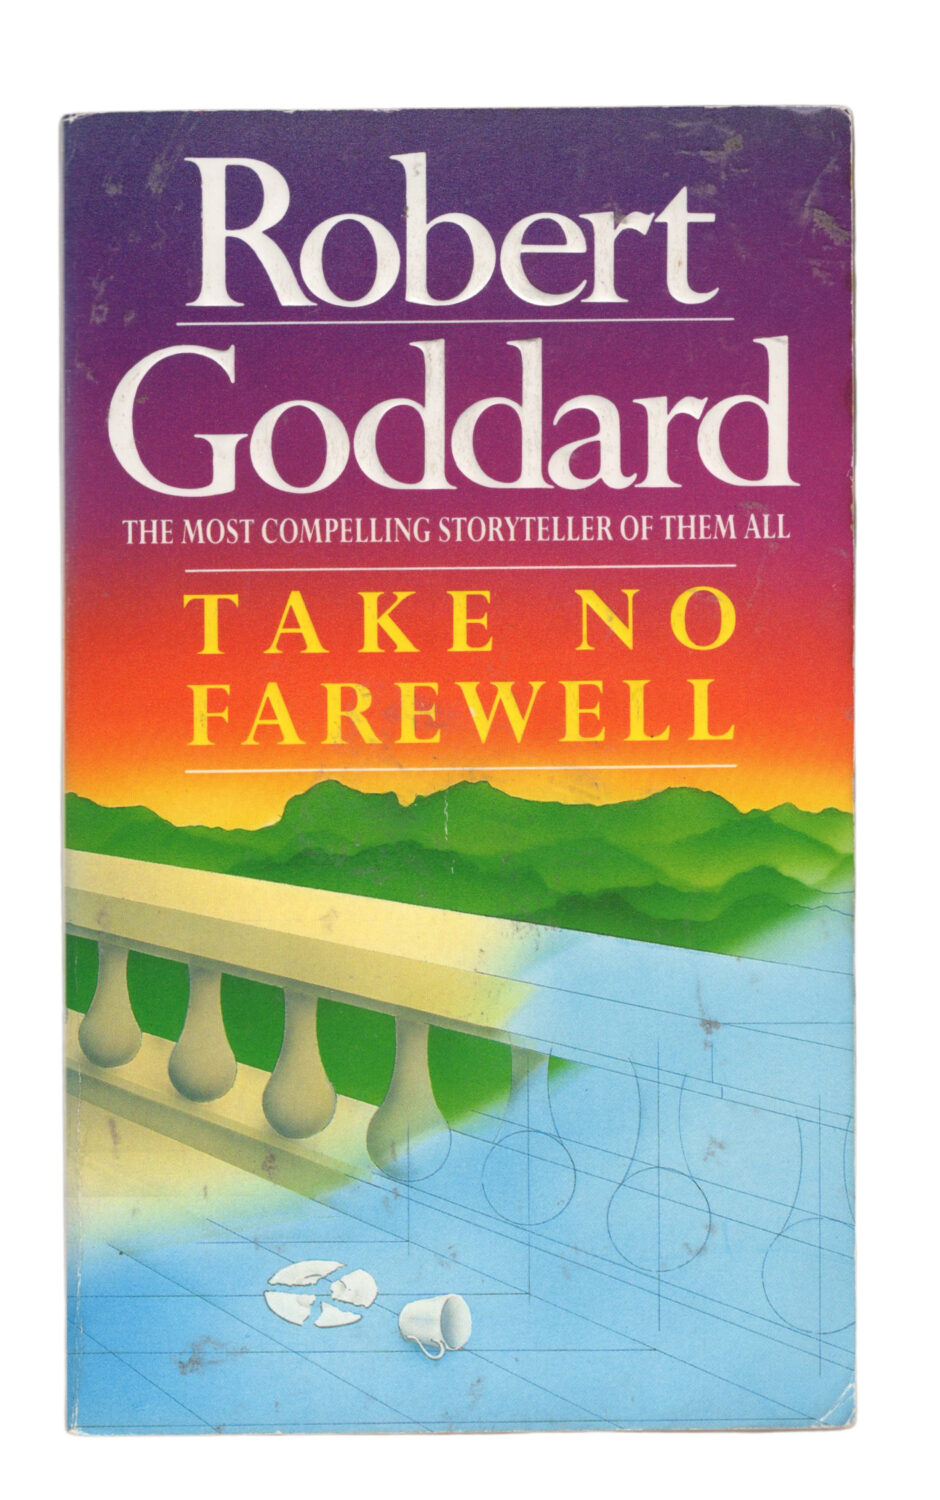 Robert Goddard - Take No Farewell